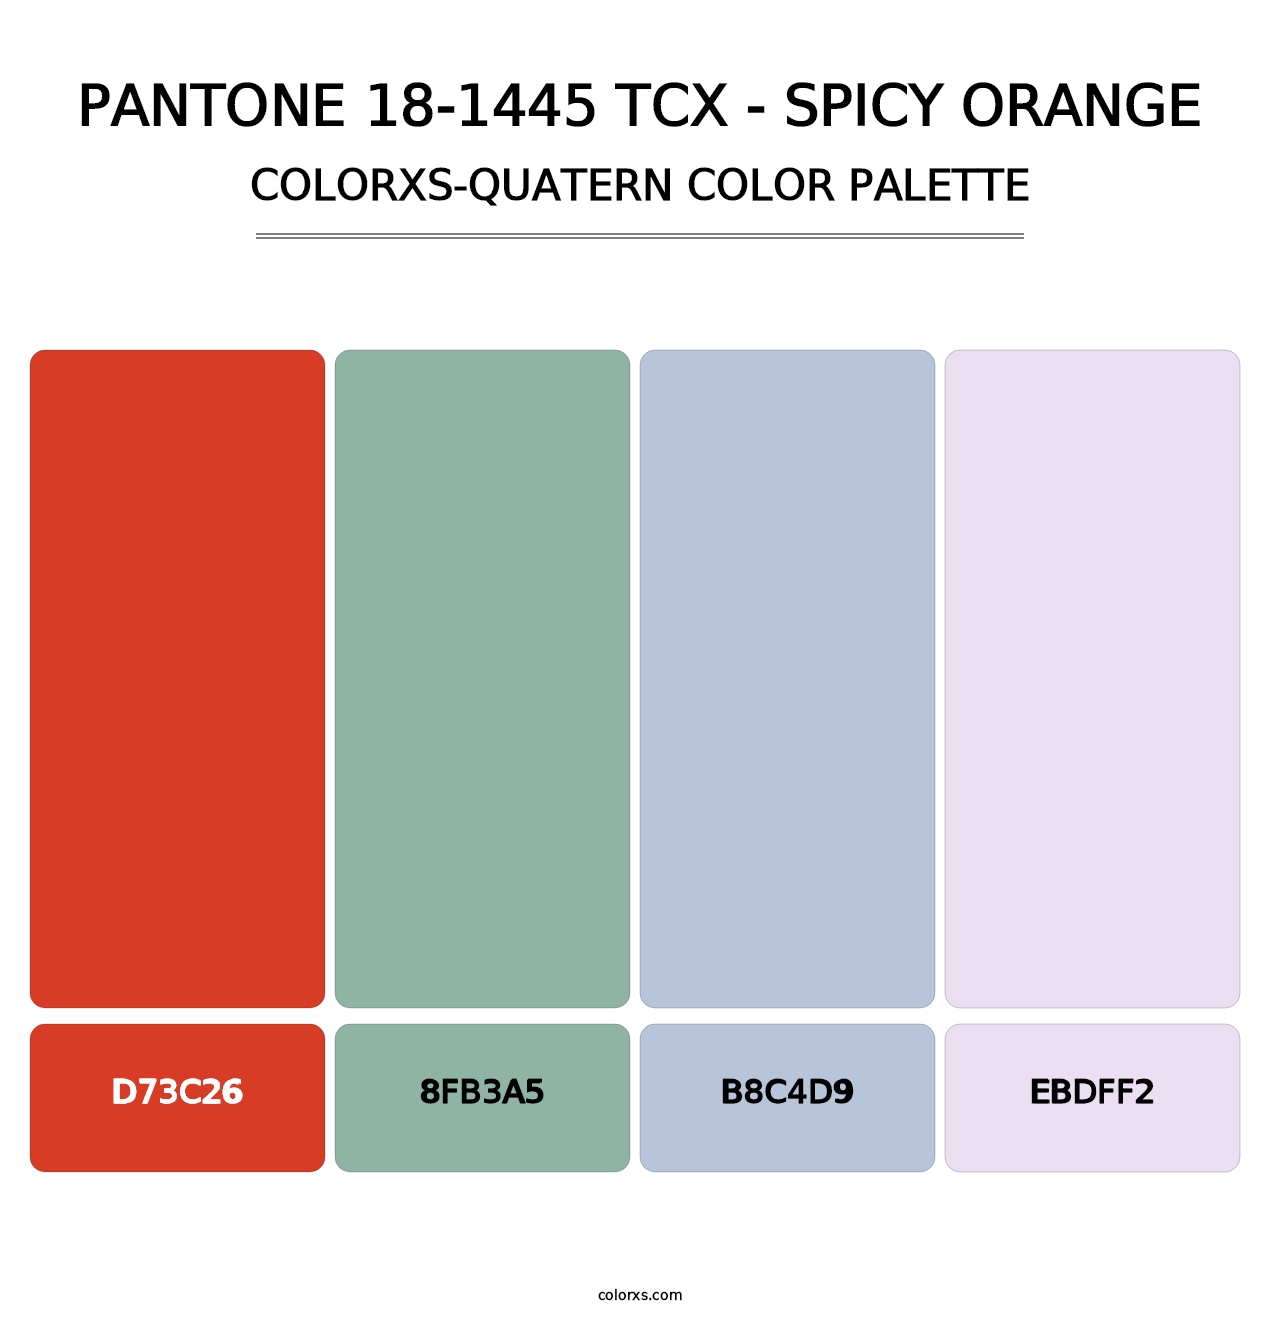 PANTONE 18-1445 TCX - Spicy Orange - Colorxs Quatern Palette